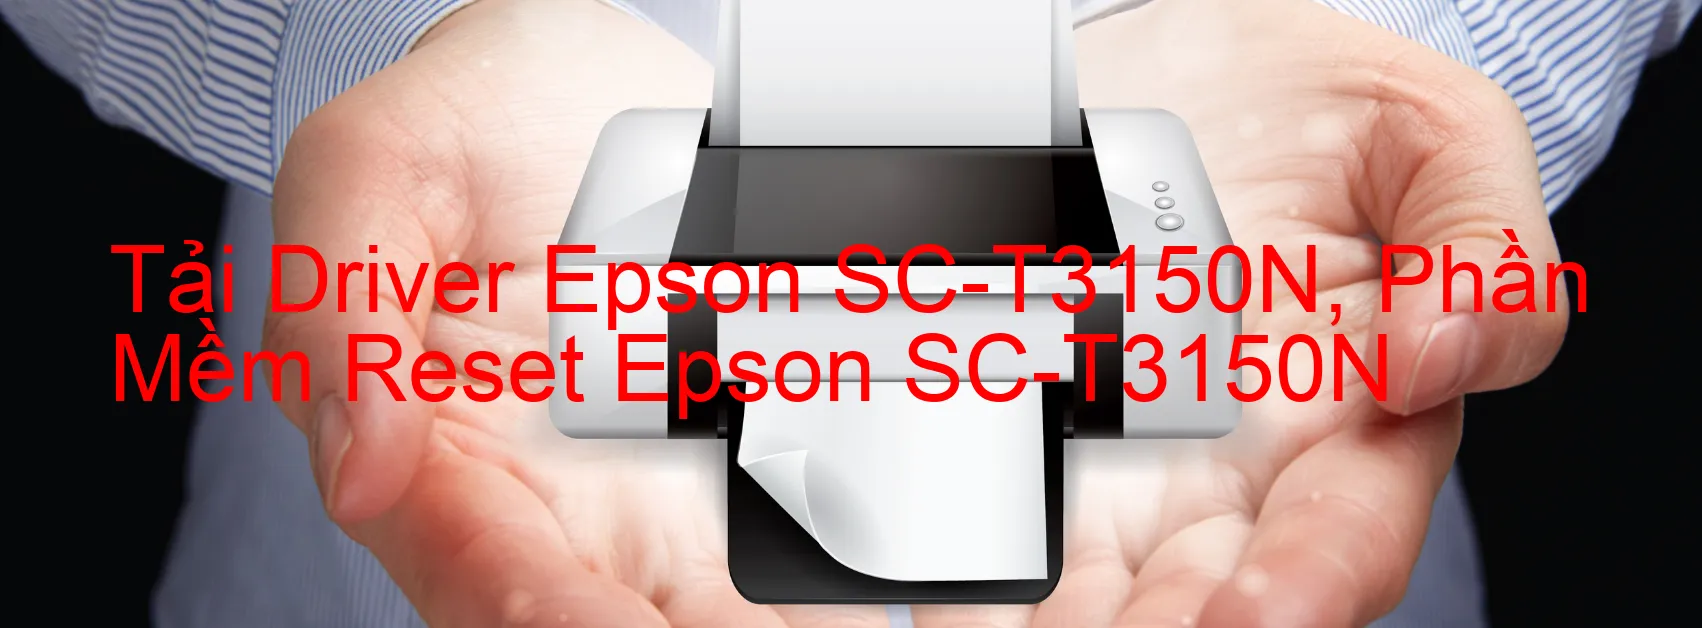 Driver Epson SC-T3150N, Phần Mềm Reset Epson SC-T3150N